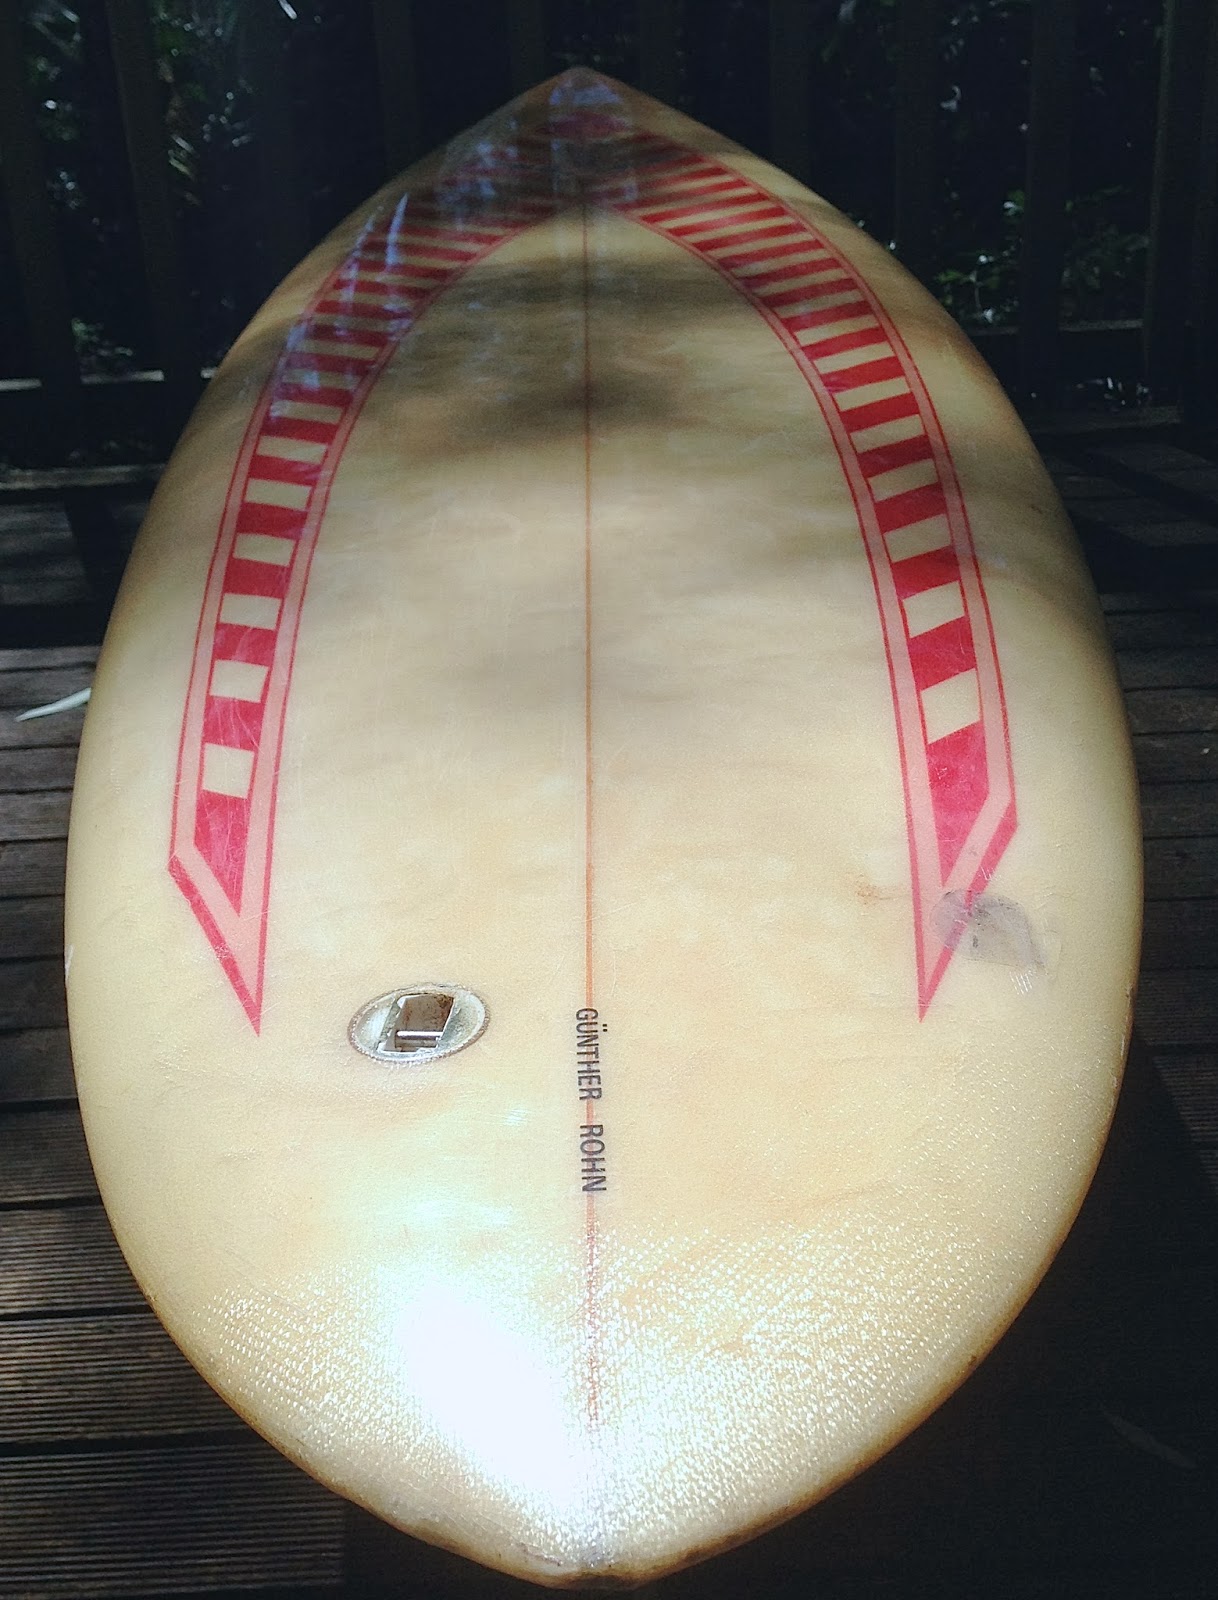 "PINTAIL FLYER" SURFBOARD DECAL STICKER 1970's RETRO SINGLE FIN SURFING SURF